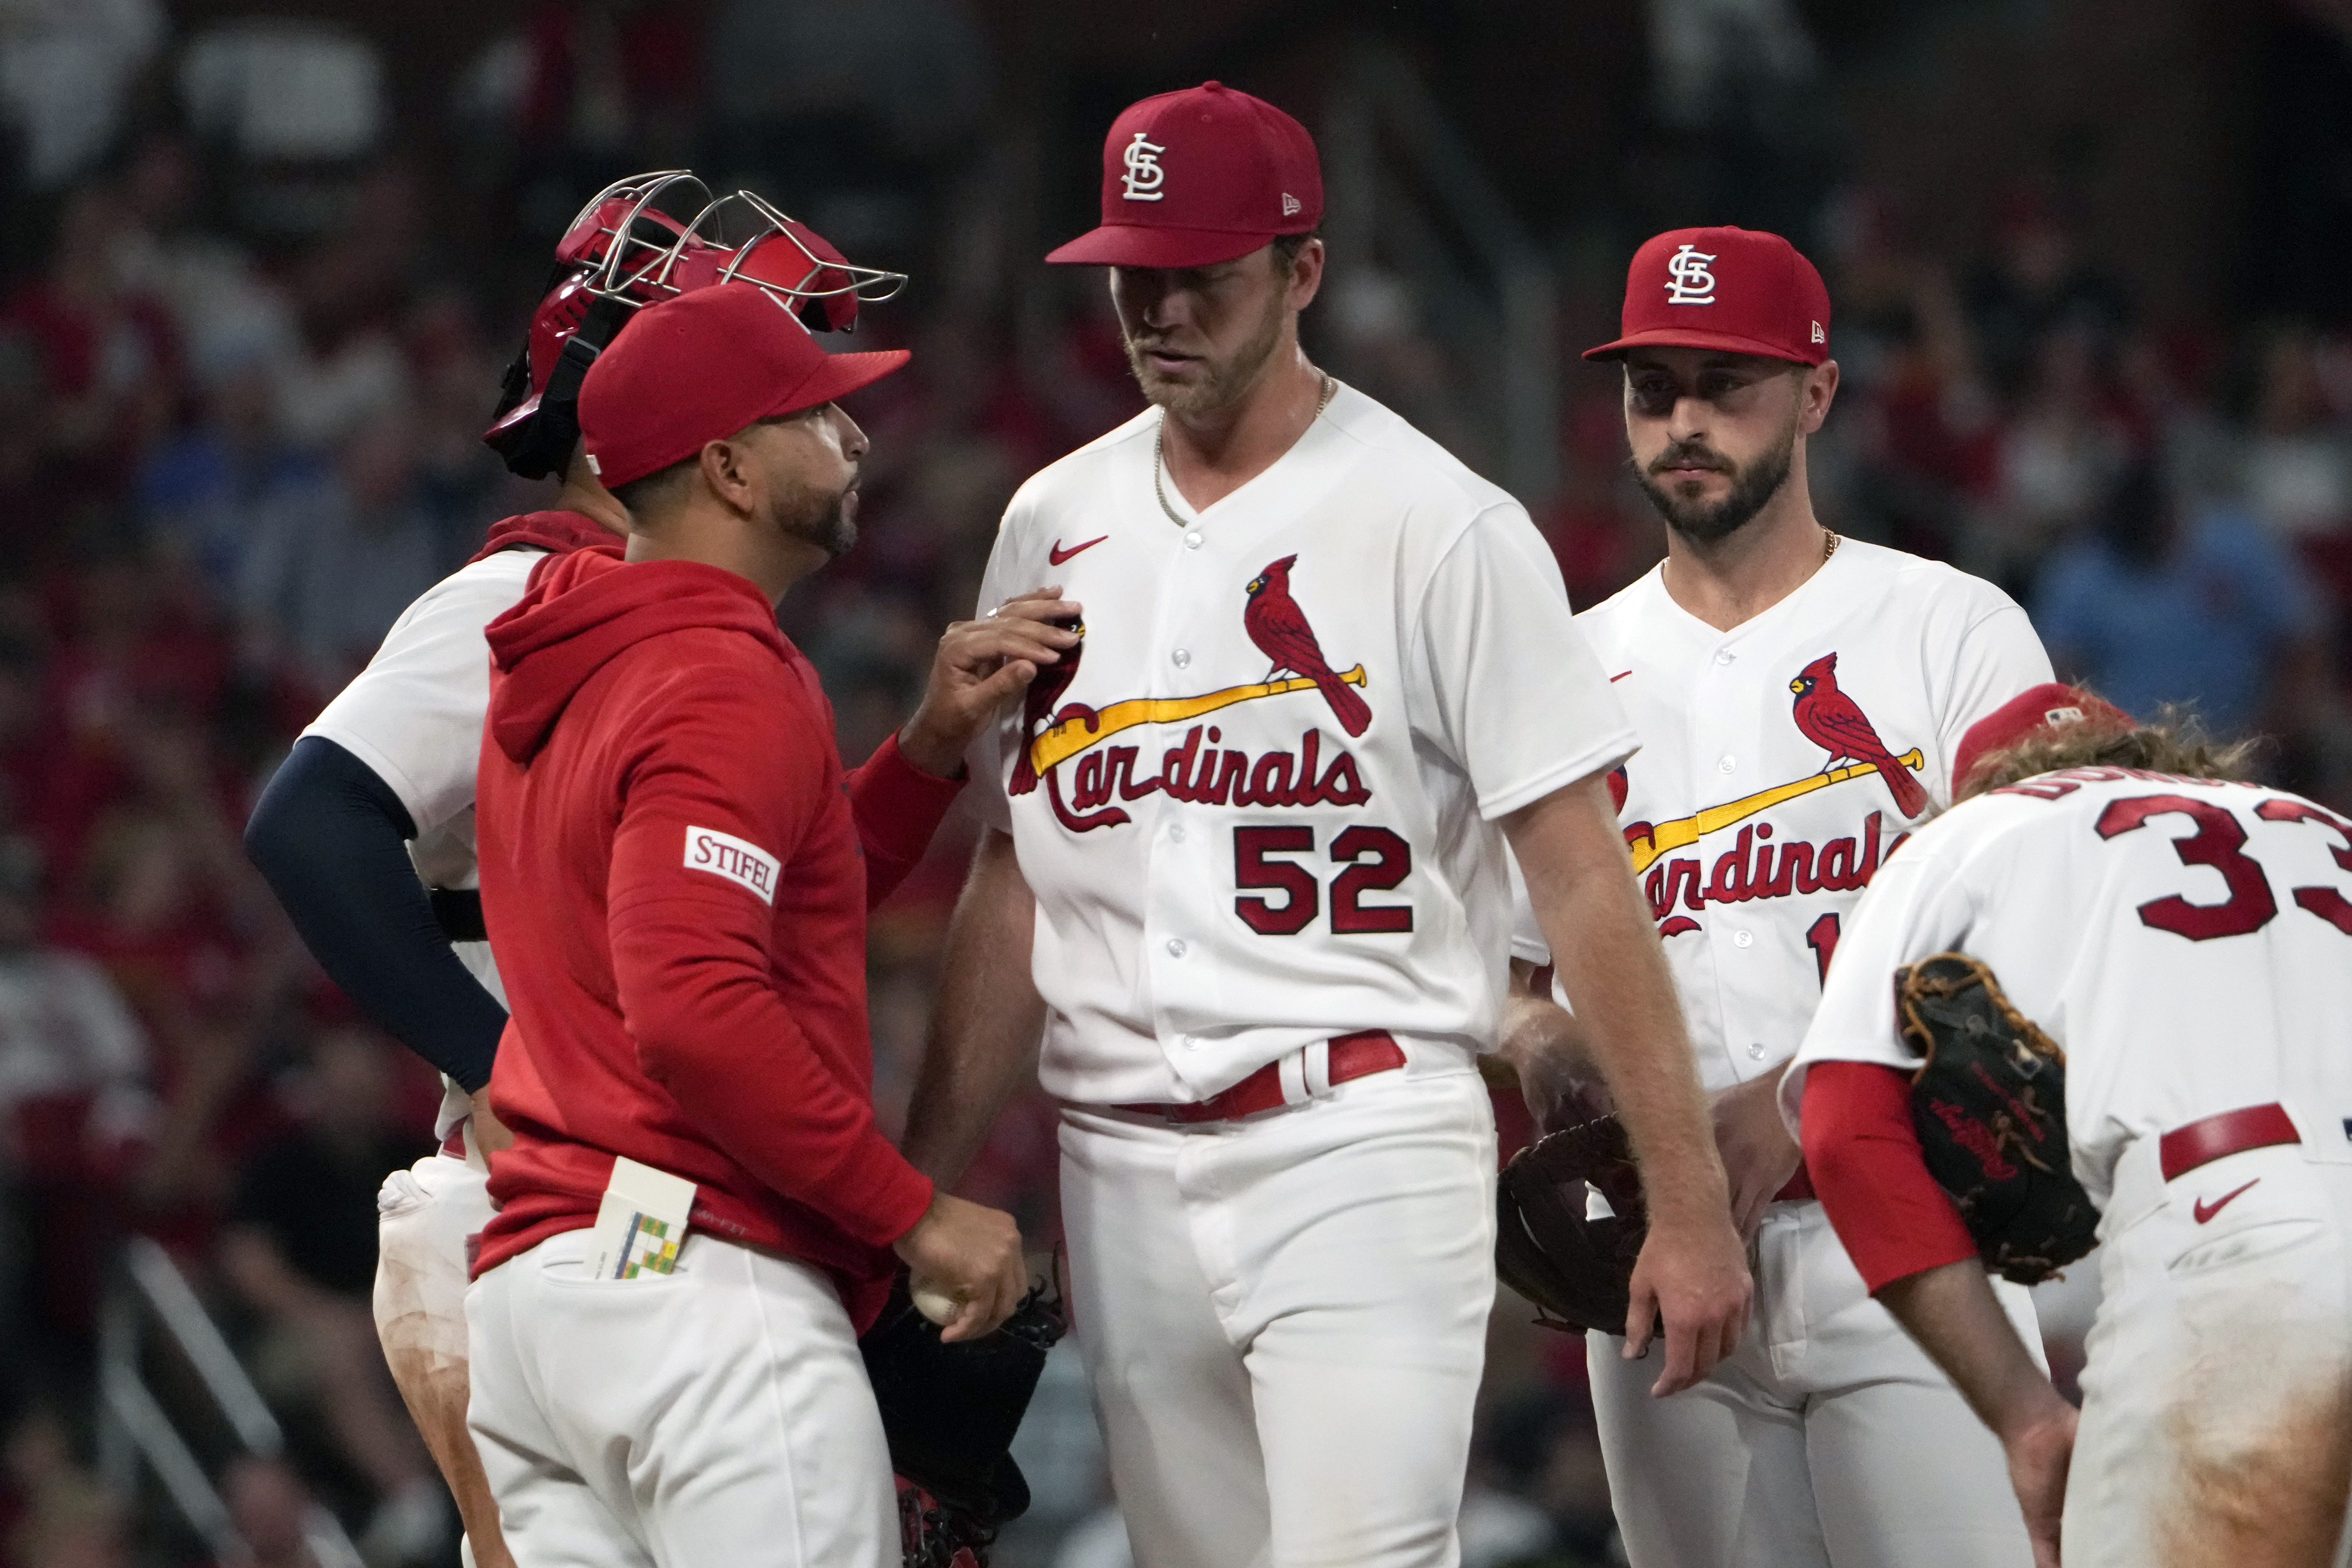 Liberatore works 5 shutout innings in season debut, Cardinals down